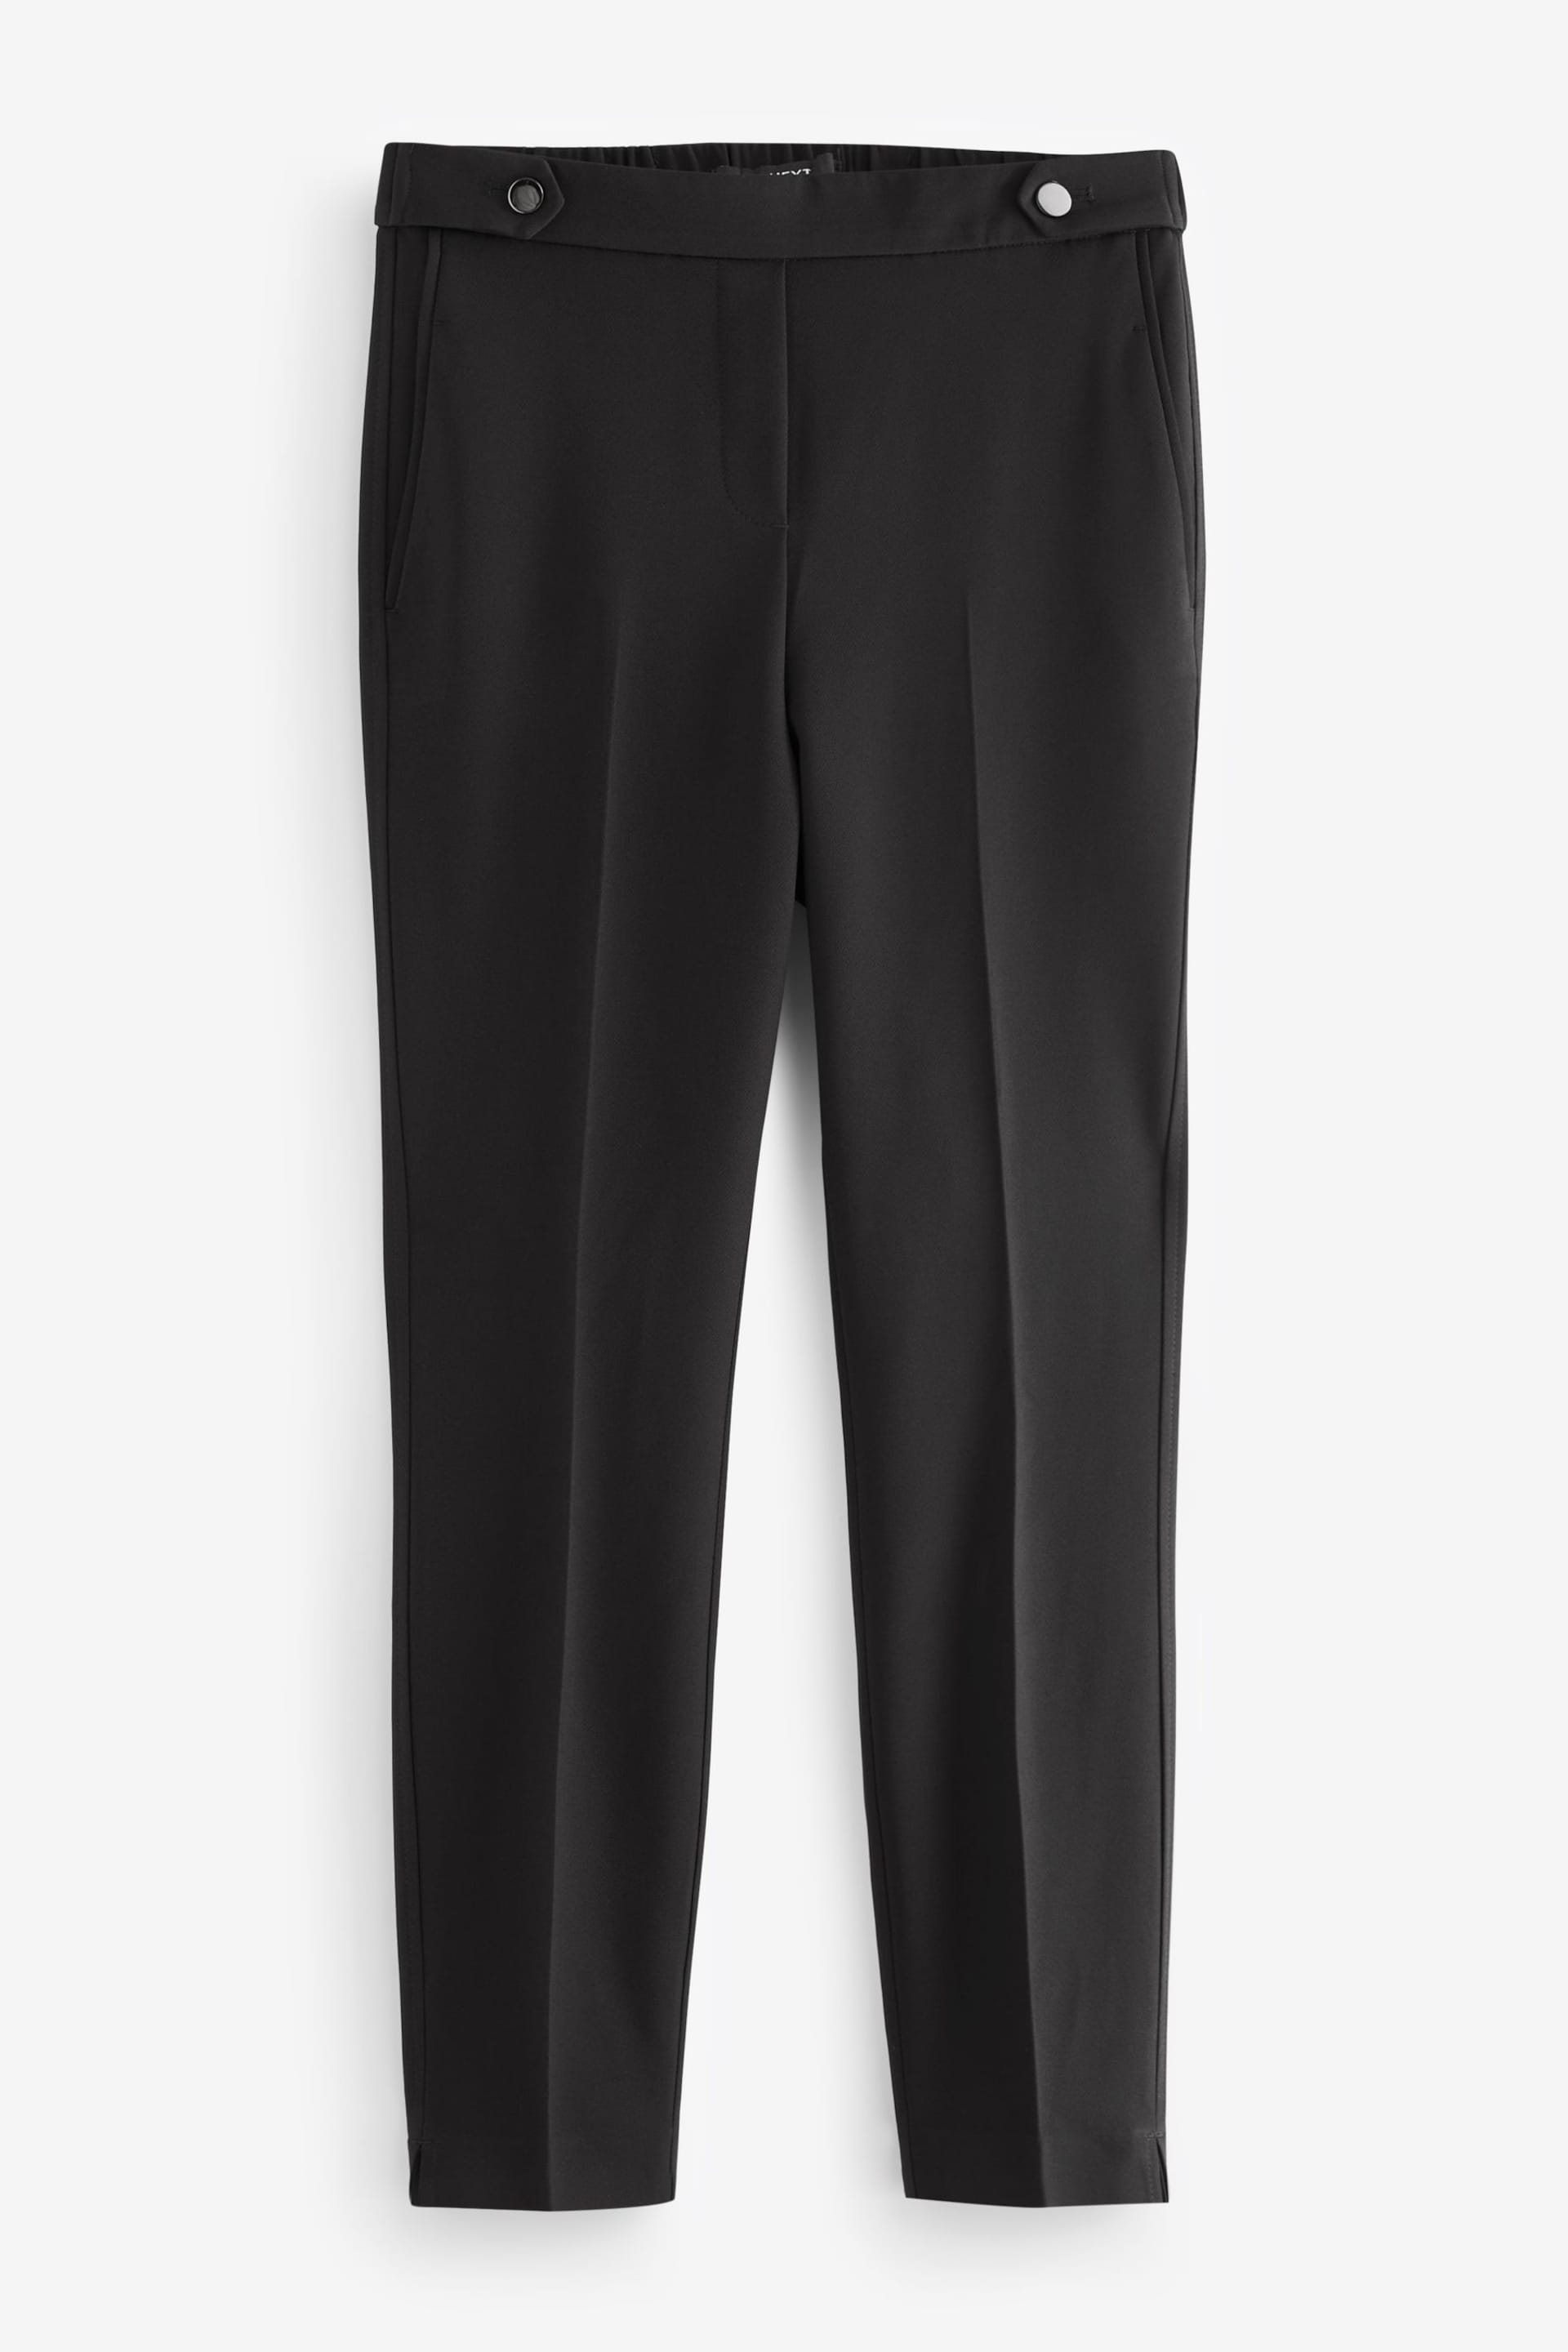 Black Tailored Elastic Back Skinny Leg Trousers - Image 4 of 5